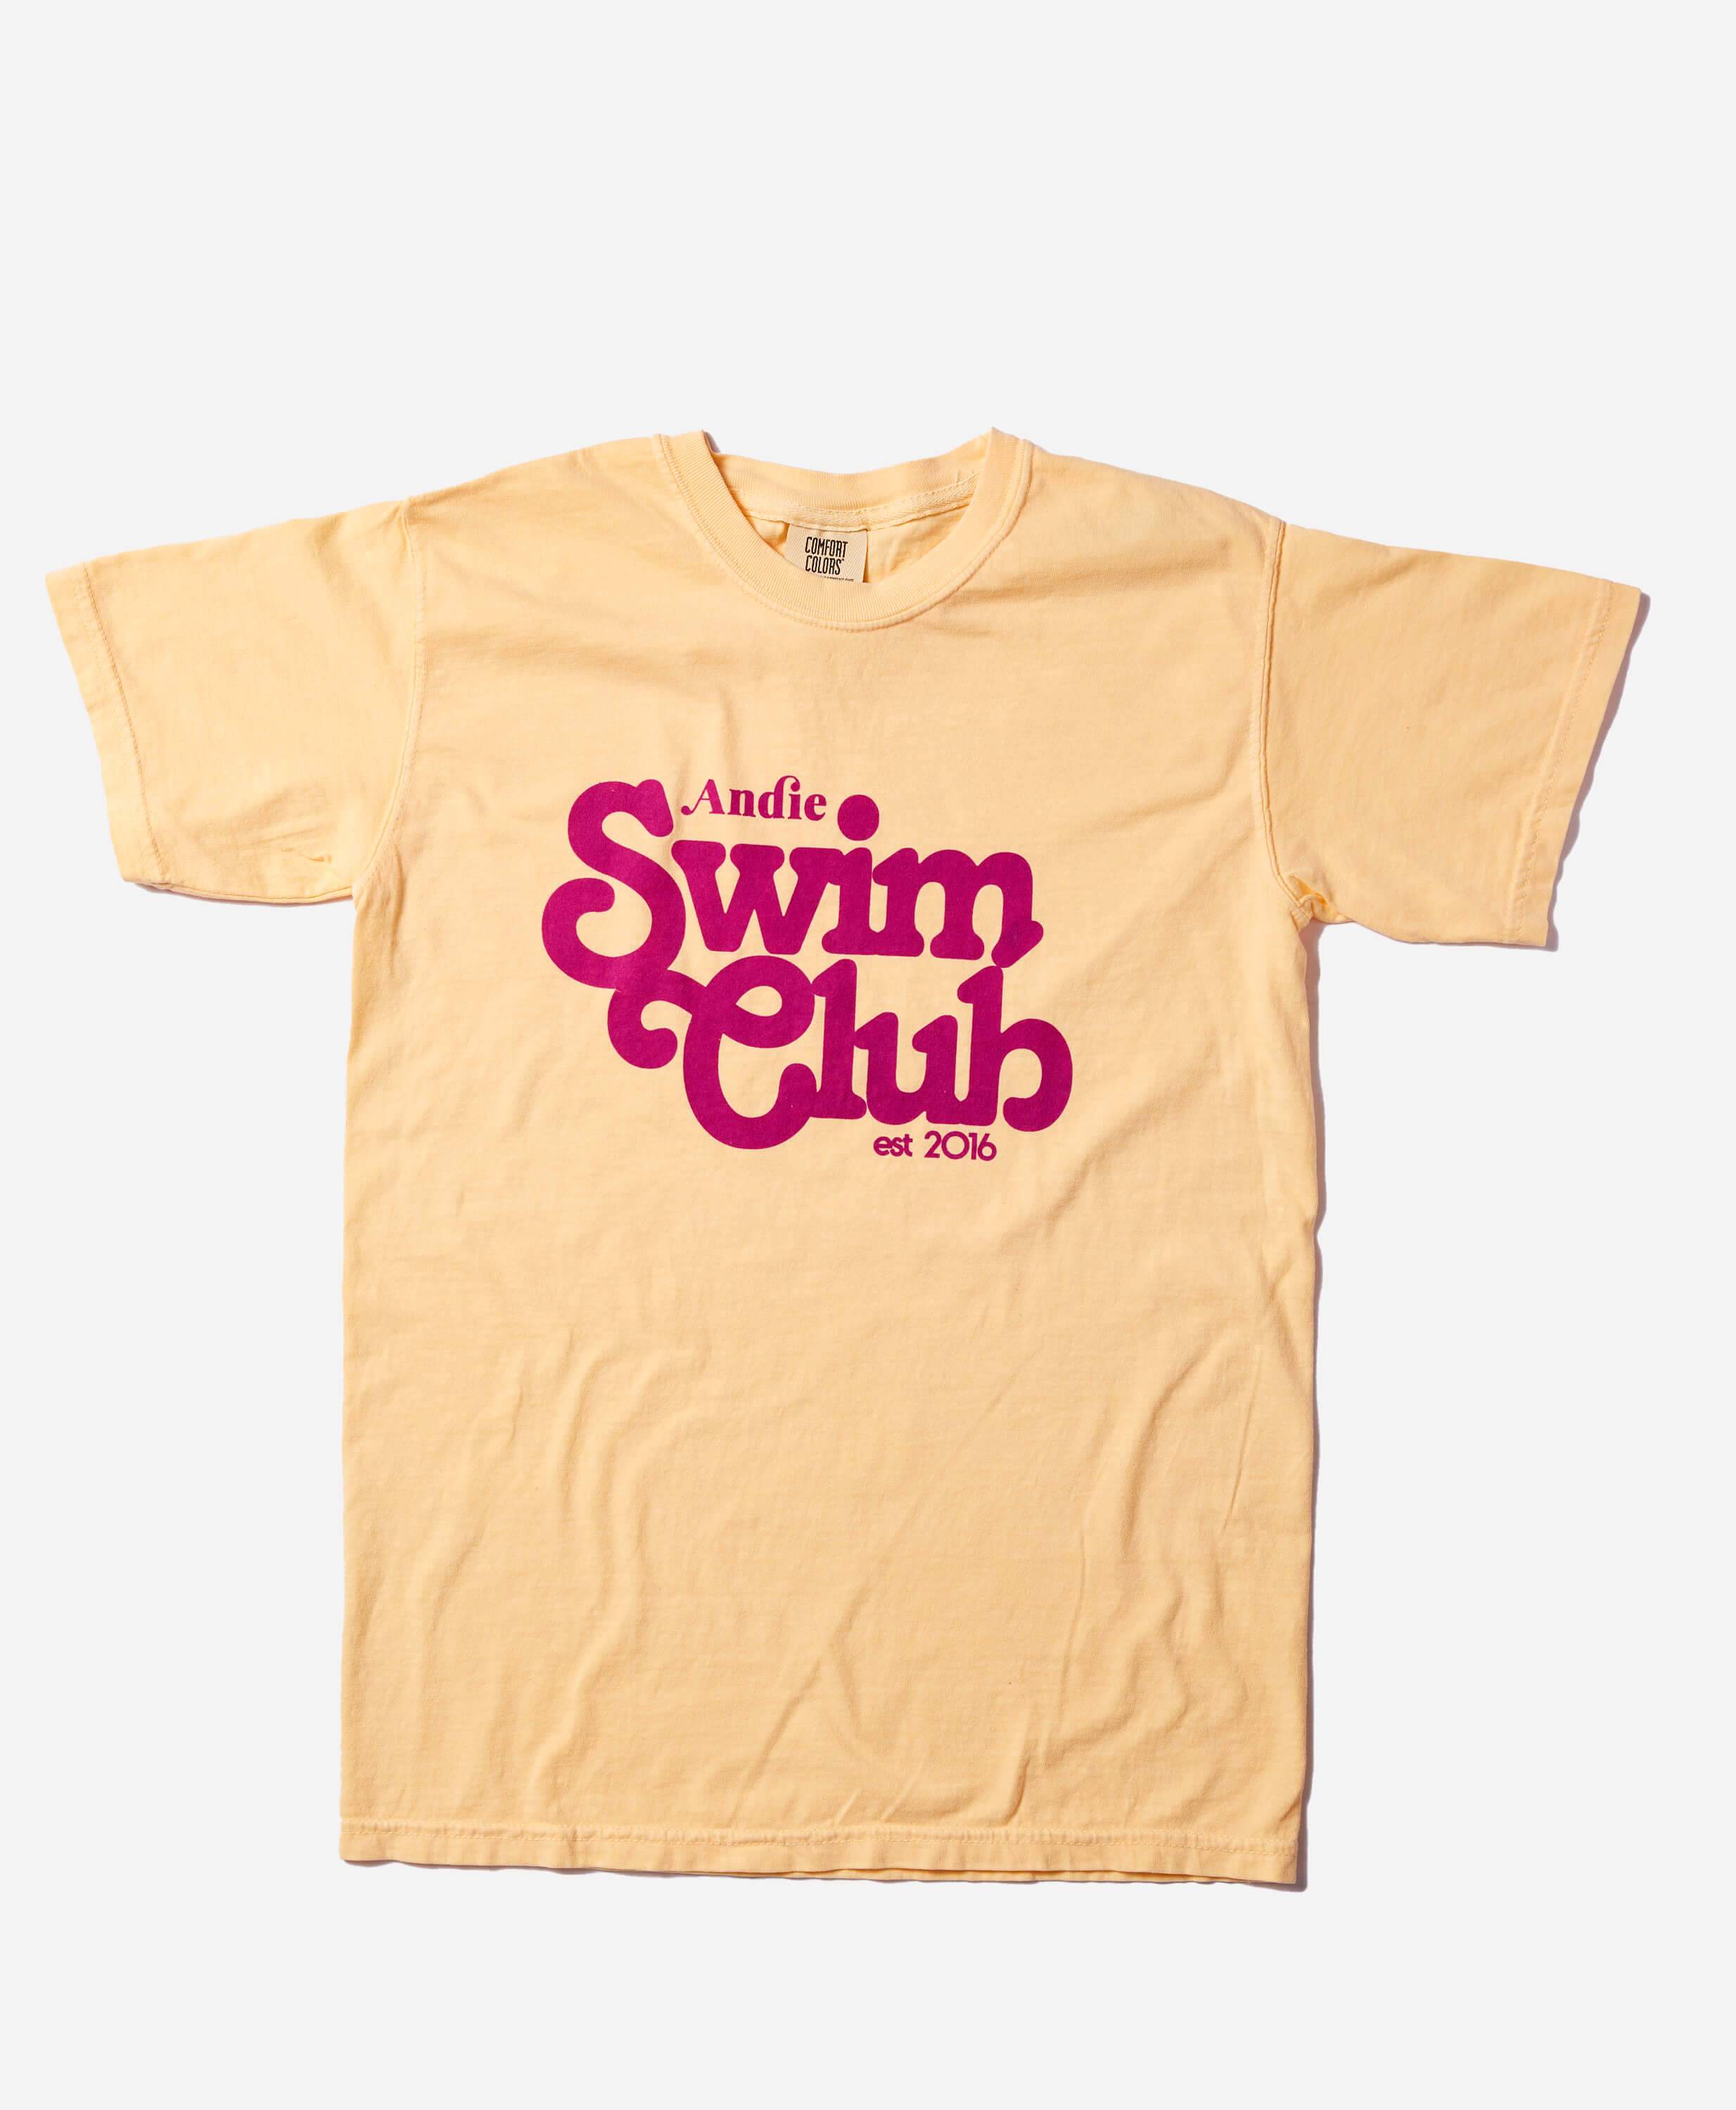 The Swim Club Tee – Andie Swim